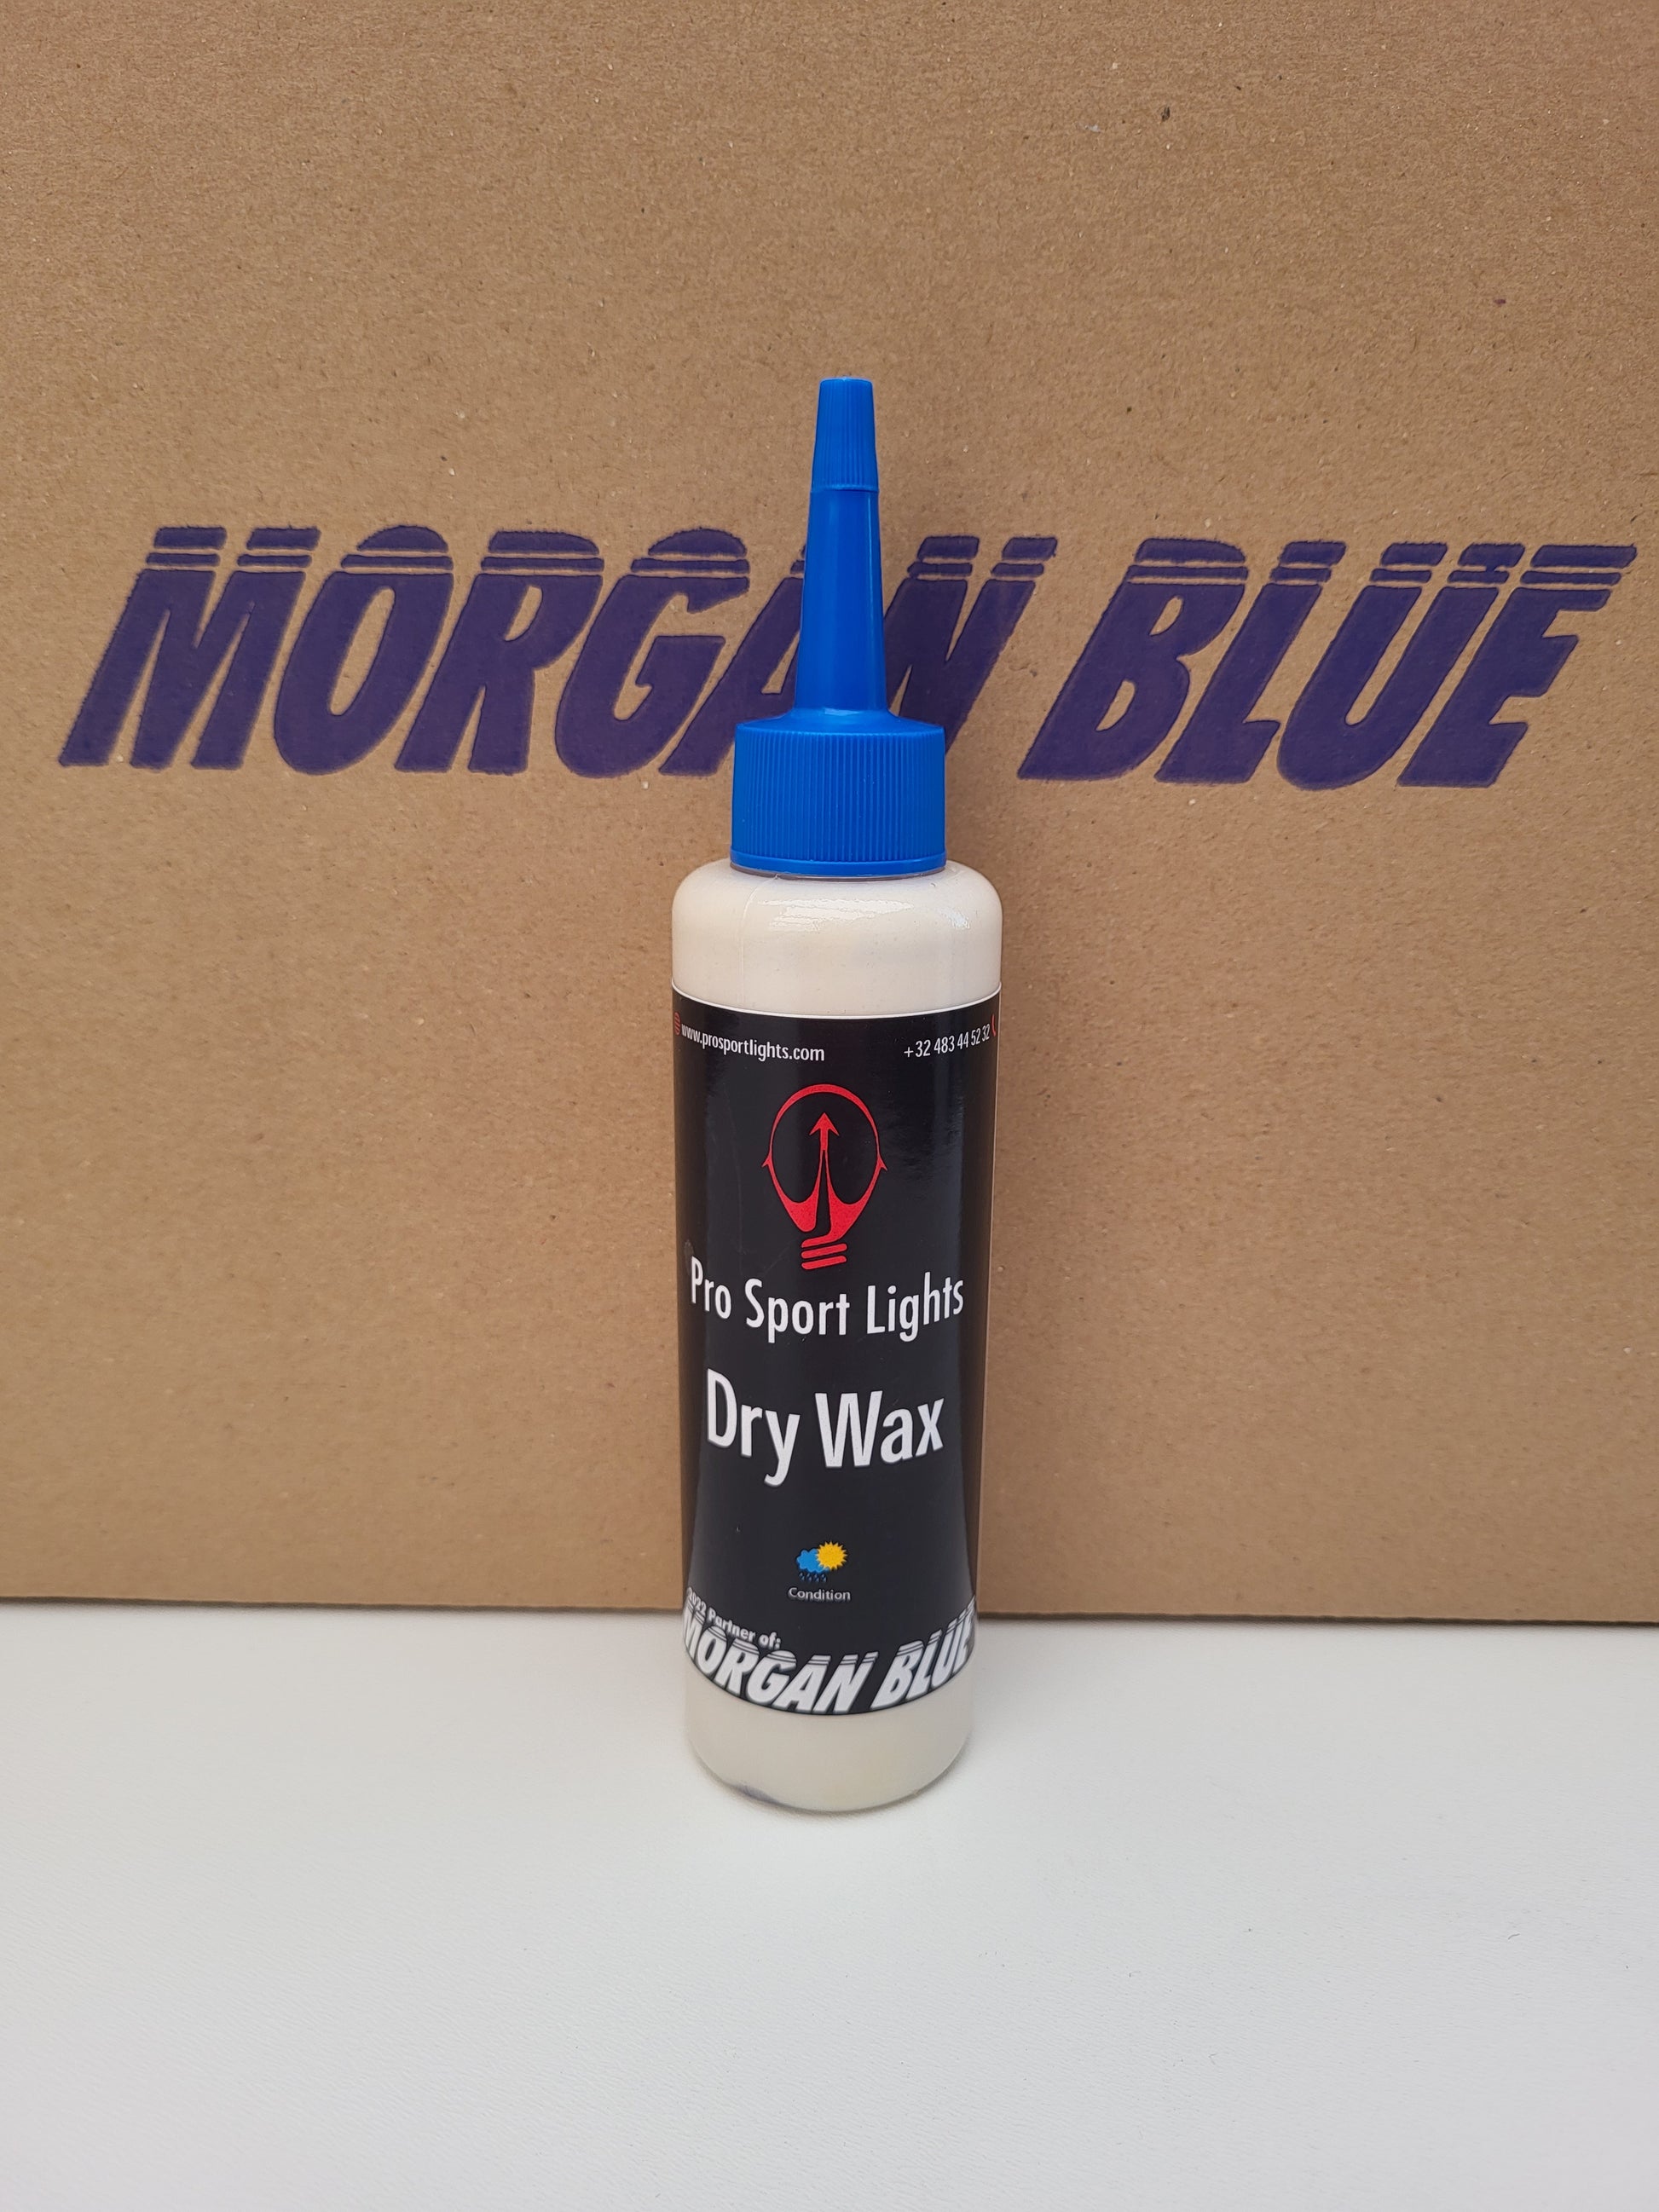 Morgan Blue dry wax kopen